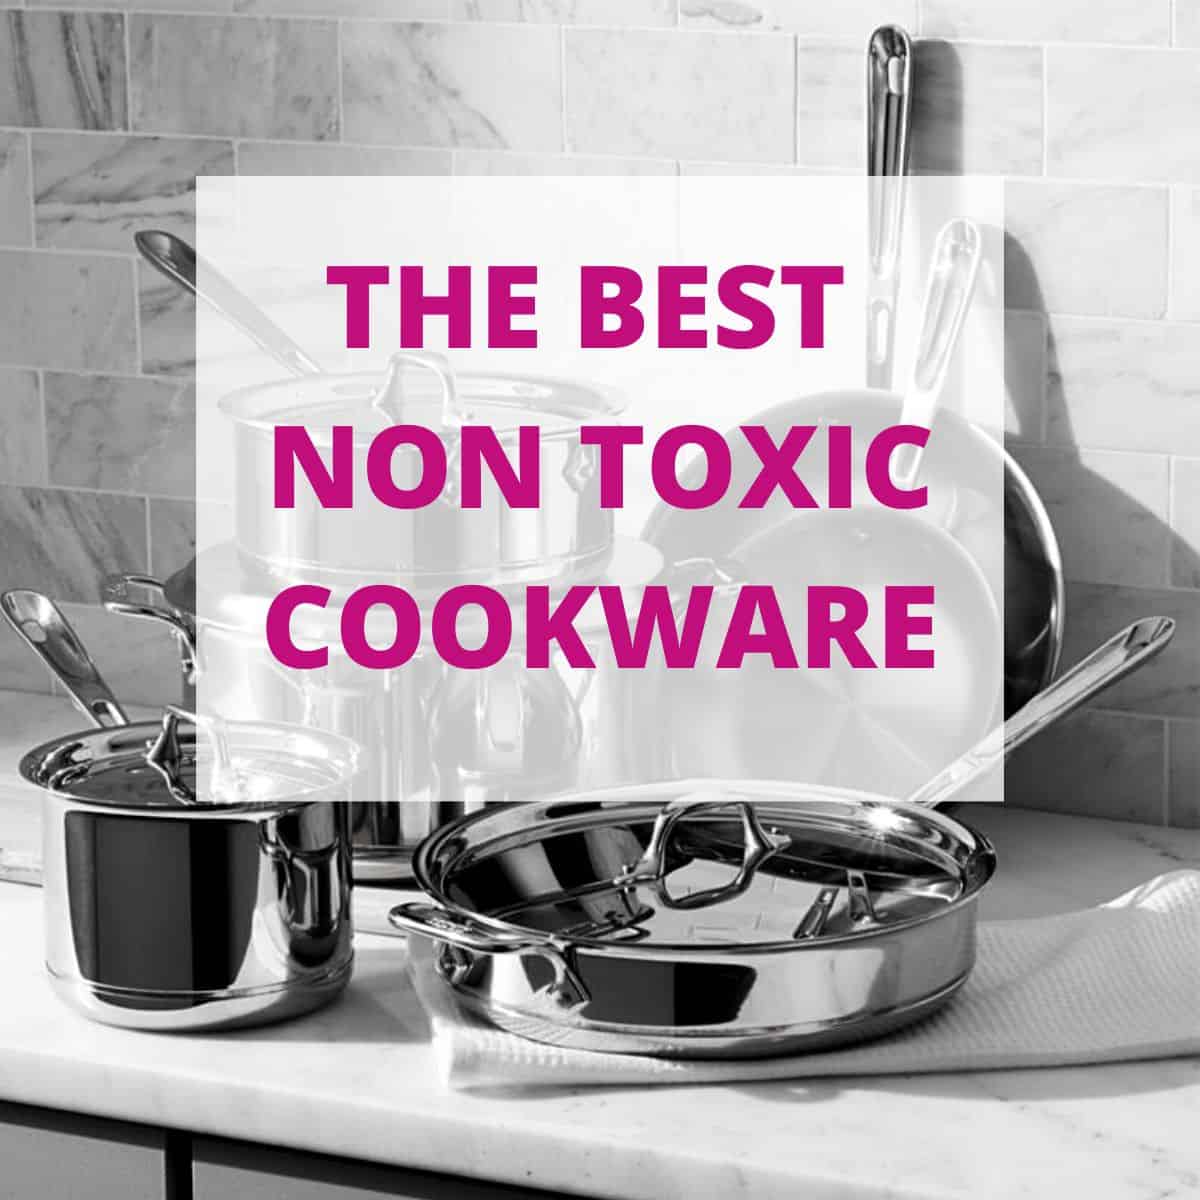 https://www.pureandsimplenourishment.com/wp-content/uploads/2020/04/the-best-non-toxic-cookware-feature-image.jpg